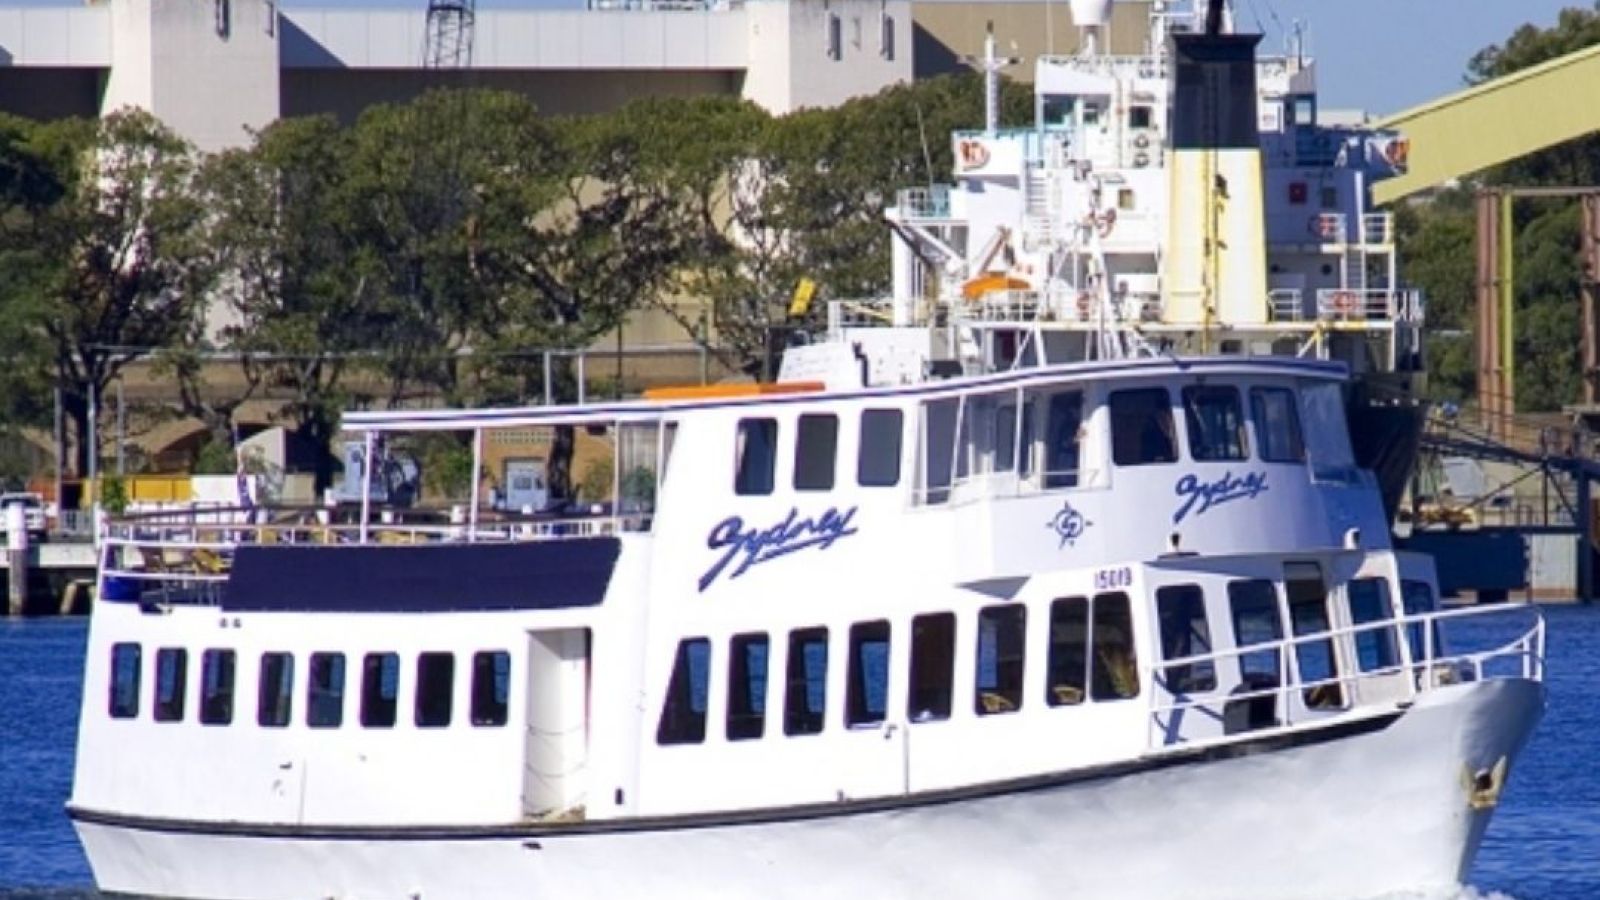 MV Sydney Boat Hire - Side view